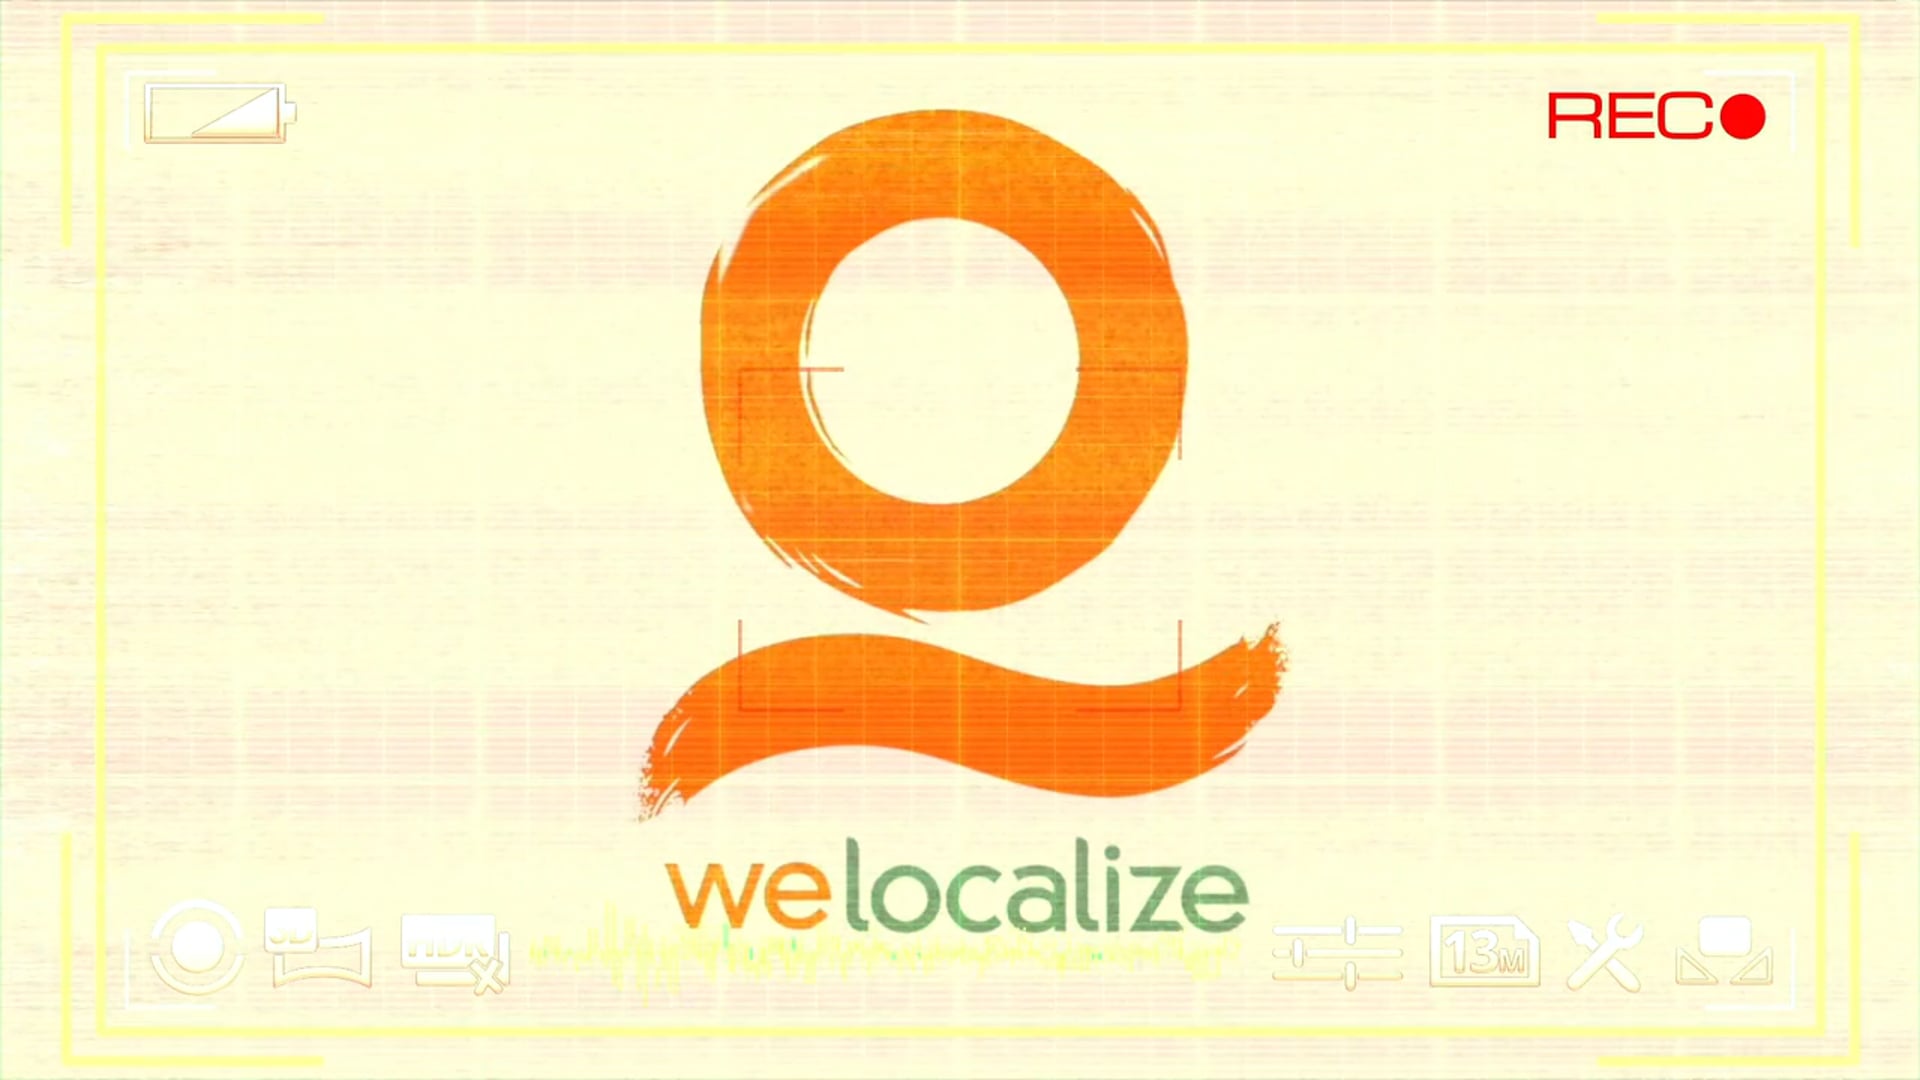 Welocalize: 'We Are Welocalize' - Santa Monica, CA